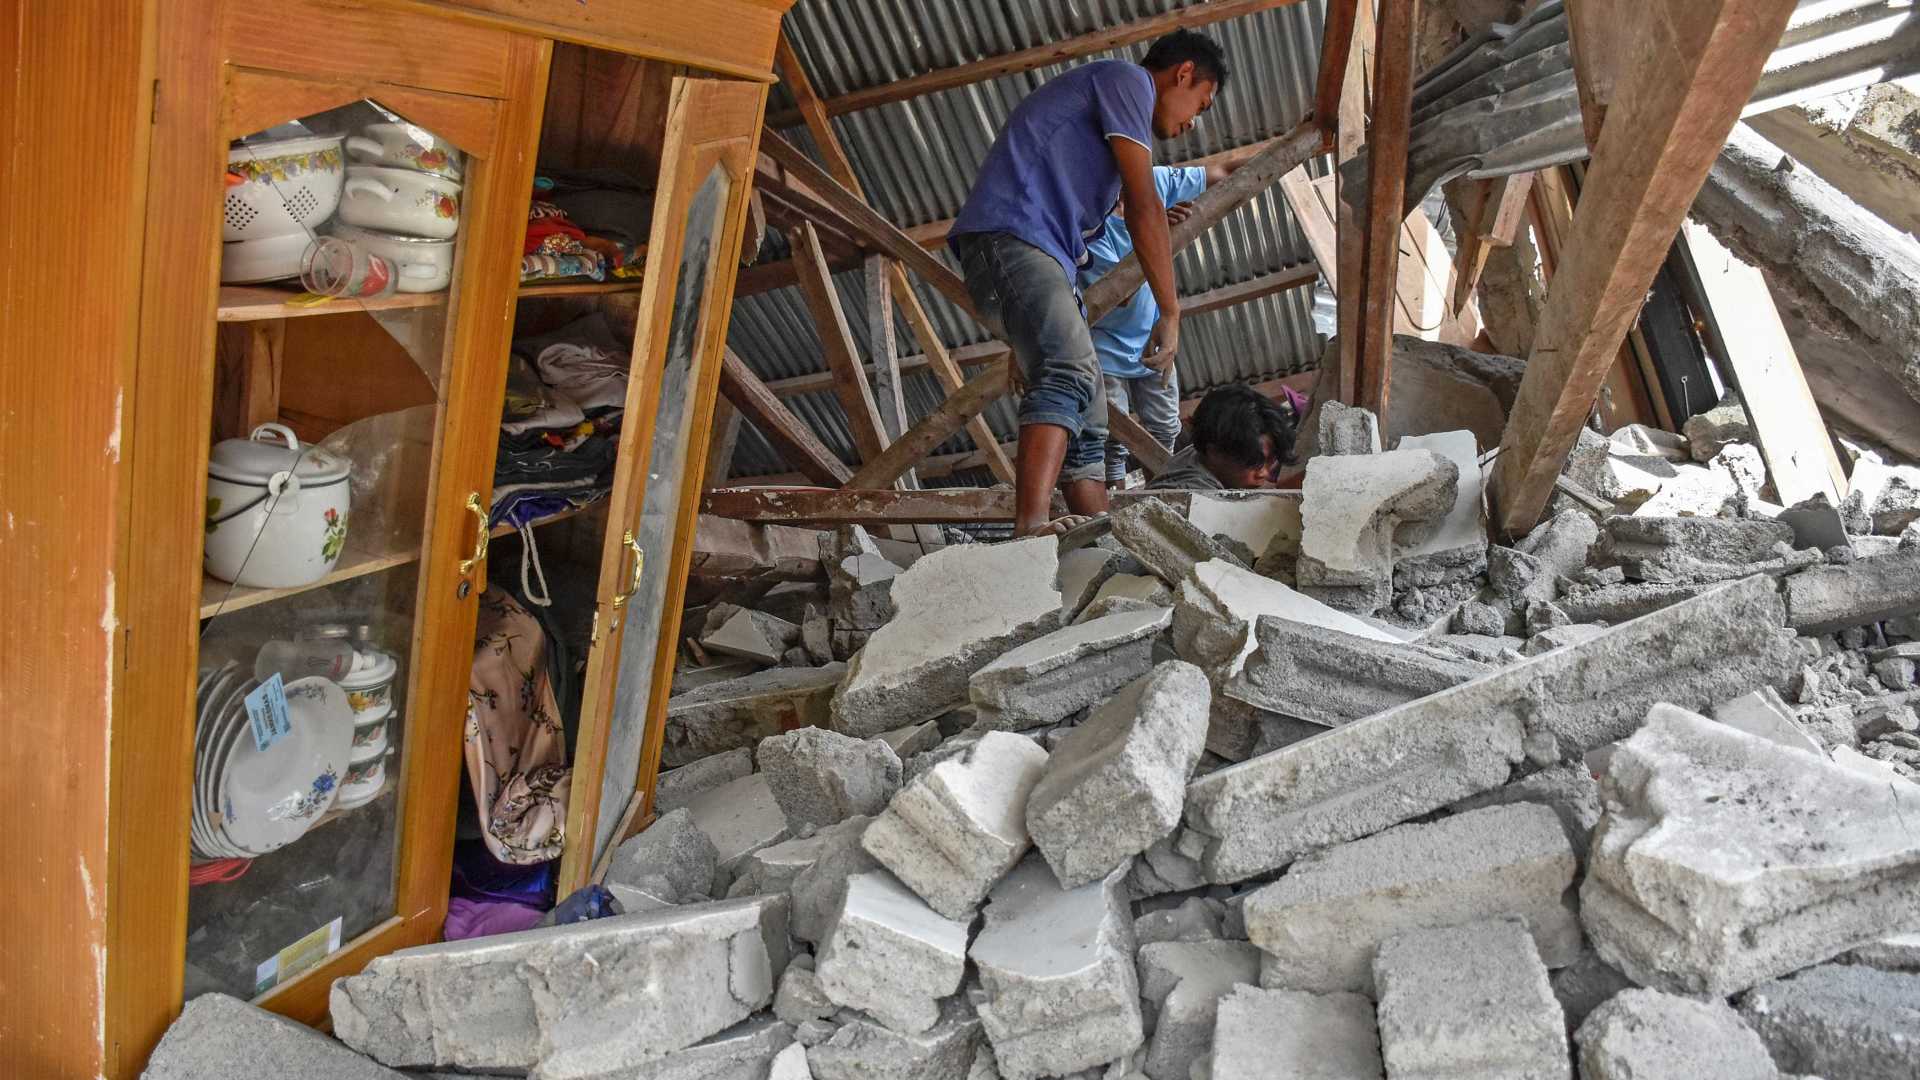 Terremoto na Indonésia